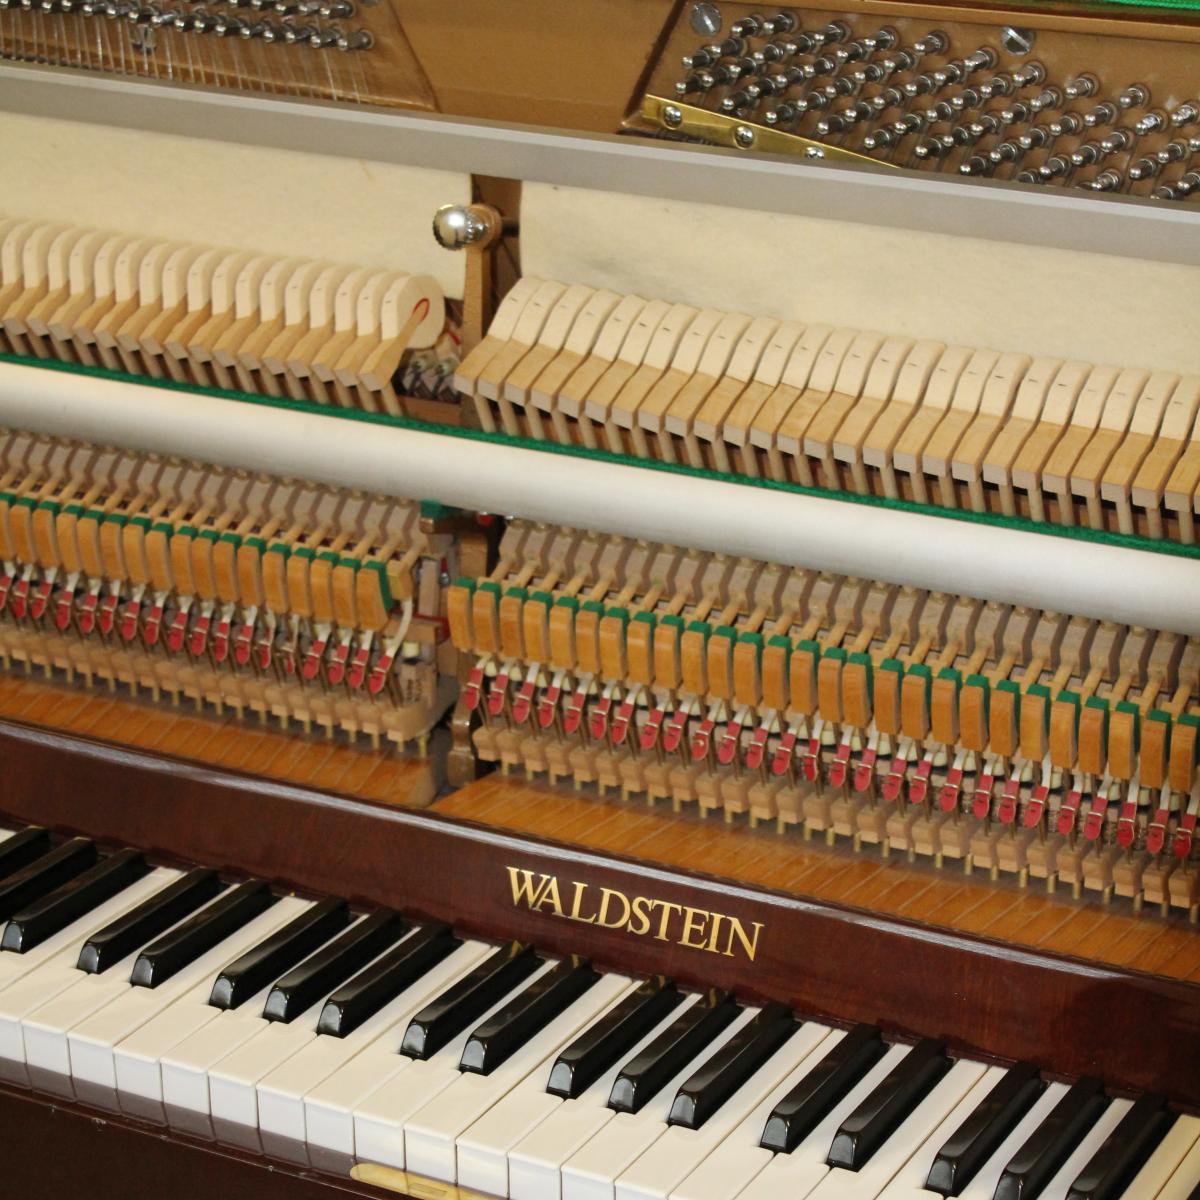 Waldstein 108cm upright piano inside